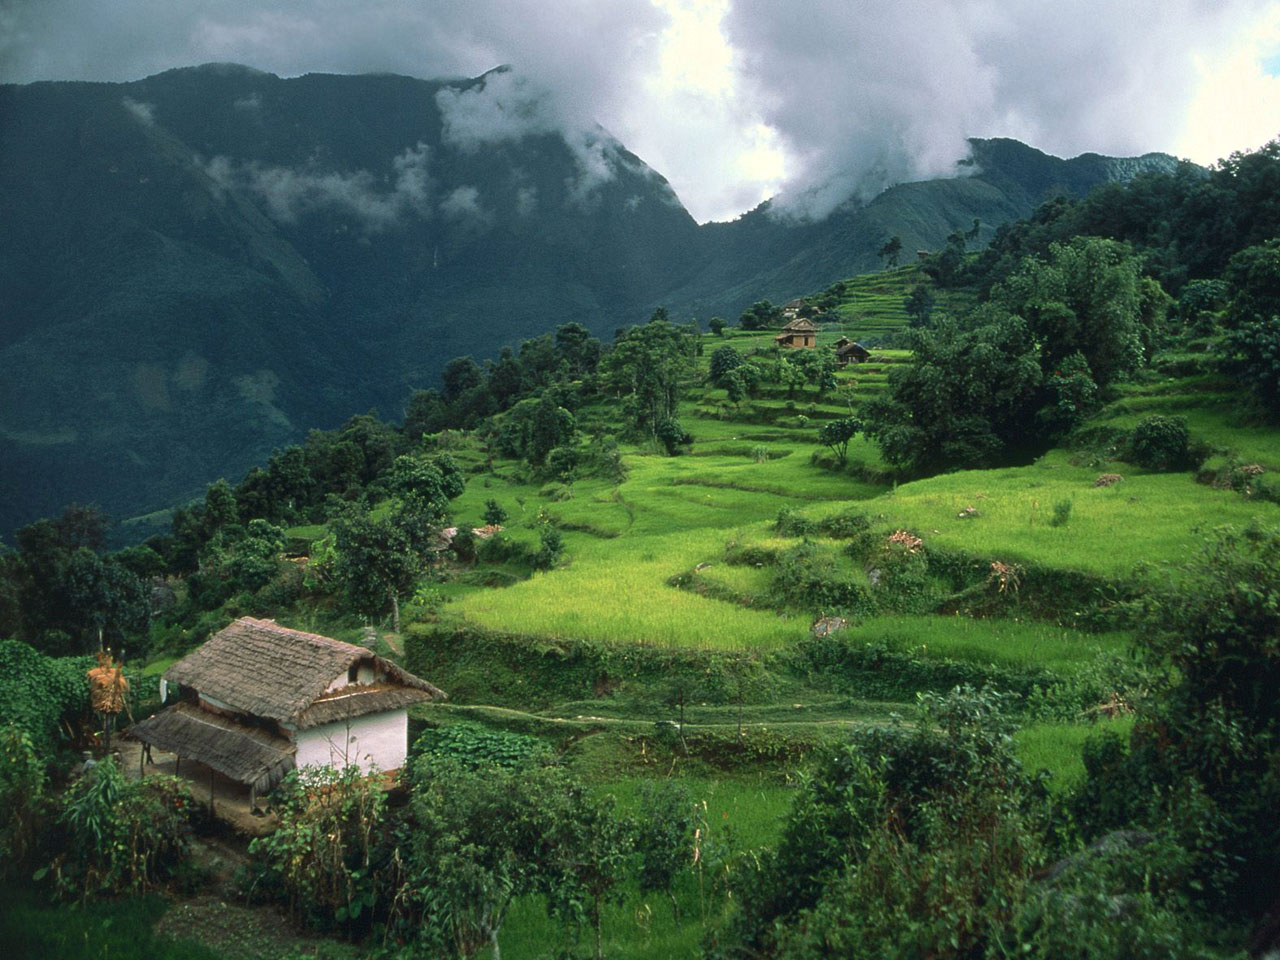 https://blogger.googleusercontent.com/img/b/R29vZ2xl/AVvXsEhGYfsEP2lnIB0zGaIFxuF45VehsFEQlKp9ZhwRoK4PKSufWV7h9D6XJXYu6y1zdK0IpWJlsI6WWHTADae24Jm7HGu2u2UL5yXXQoQjwib1HSvUdVUECJ8__goRaHCUzTsKPMhQ6CCmunQ/s1600/Arun_River_Region_Nepal.jpg